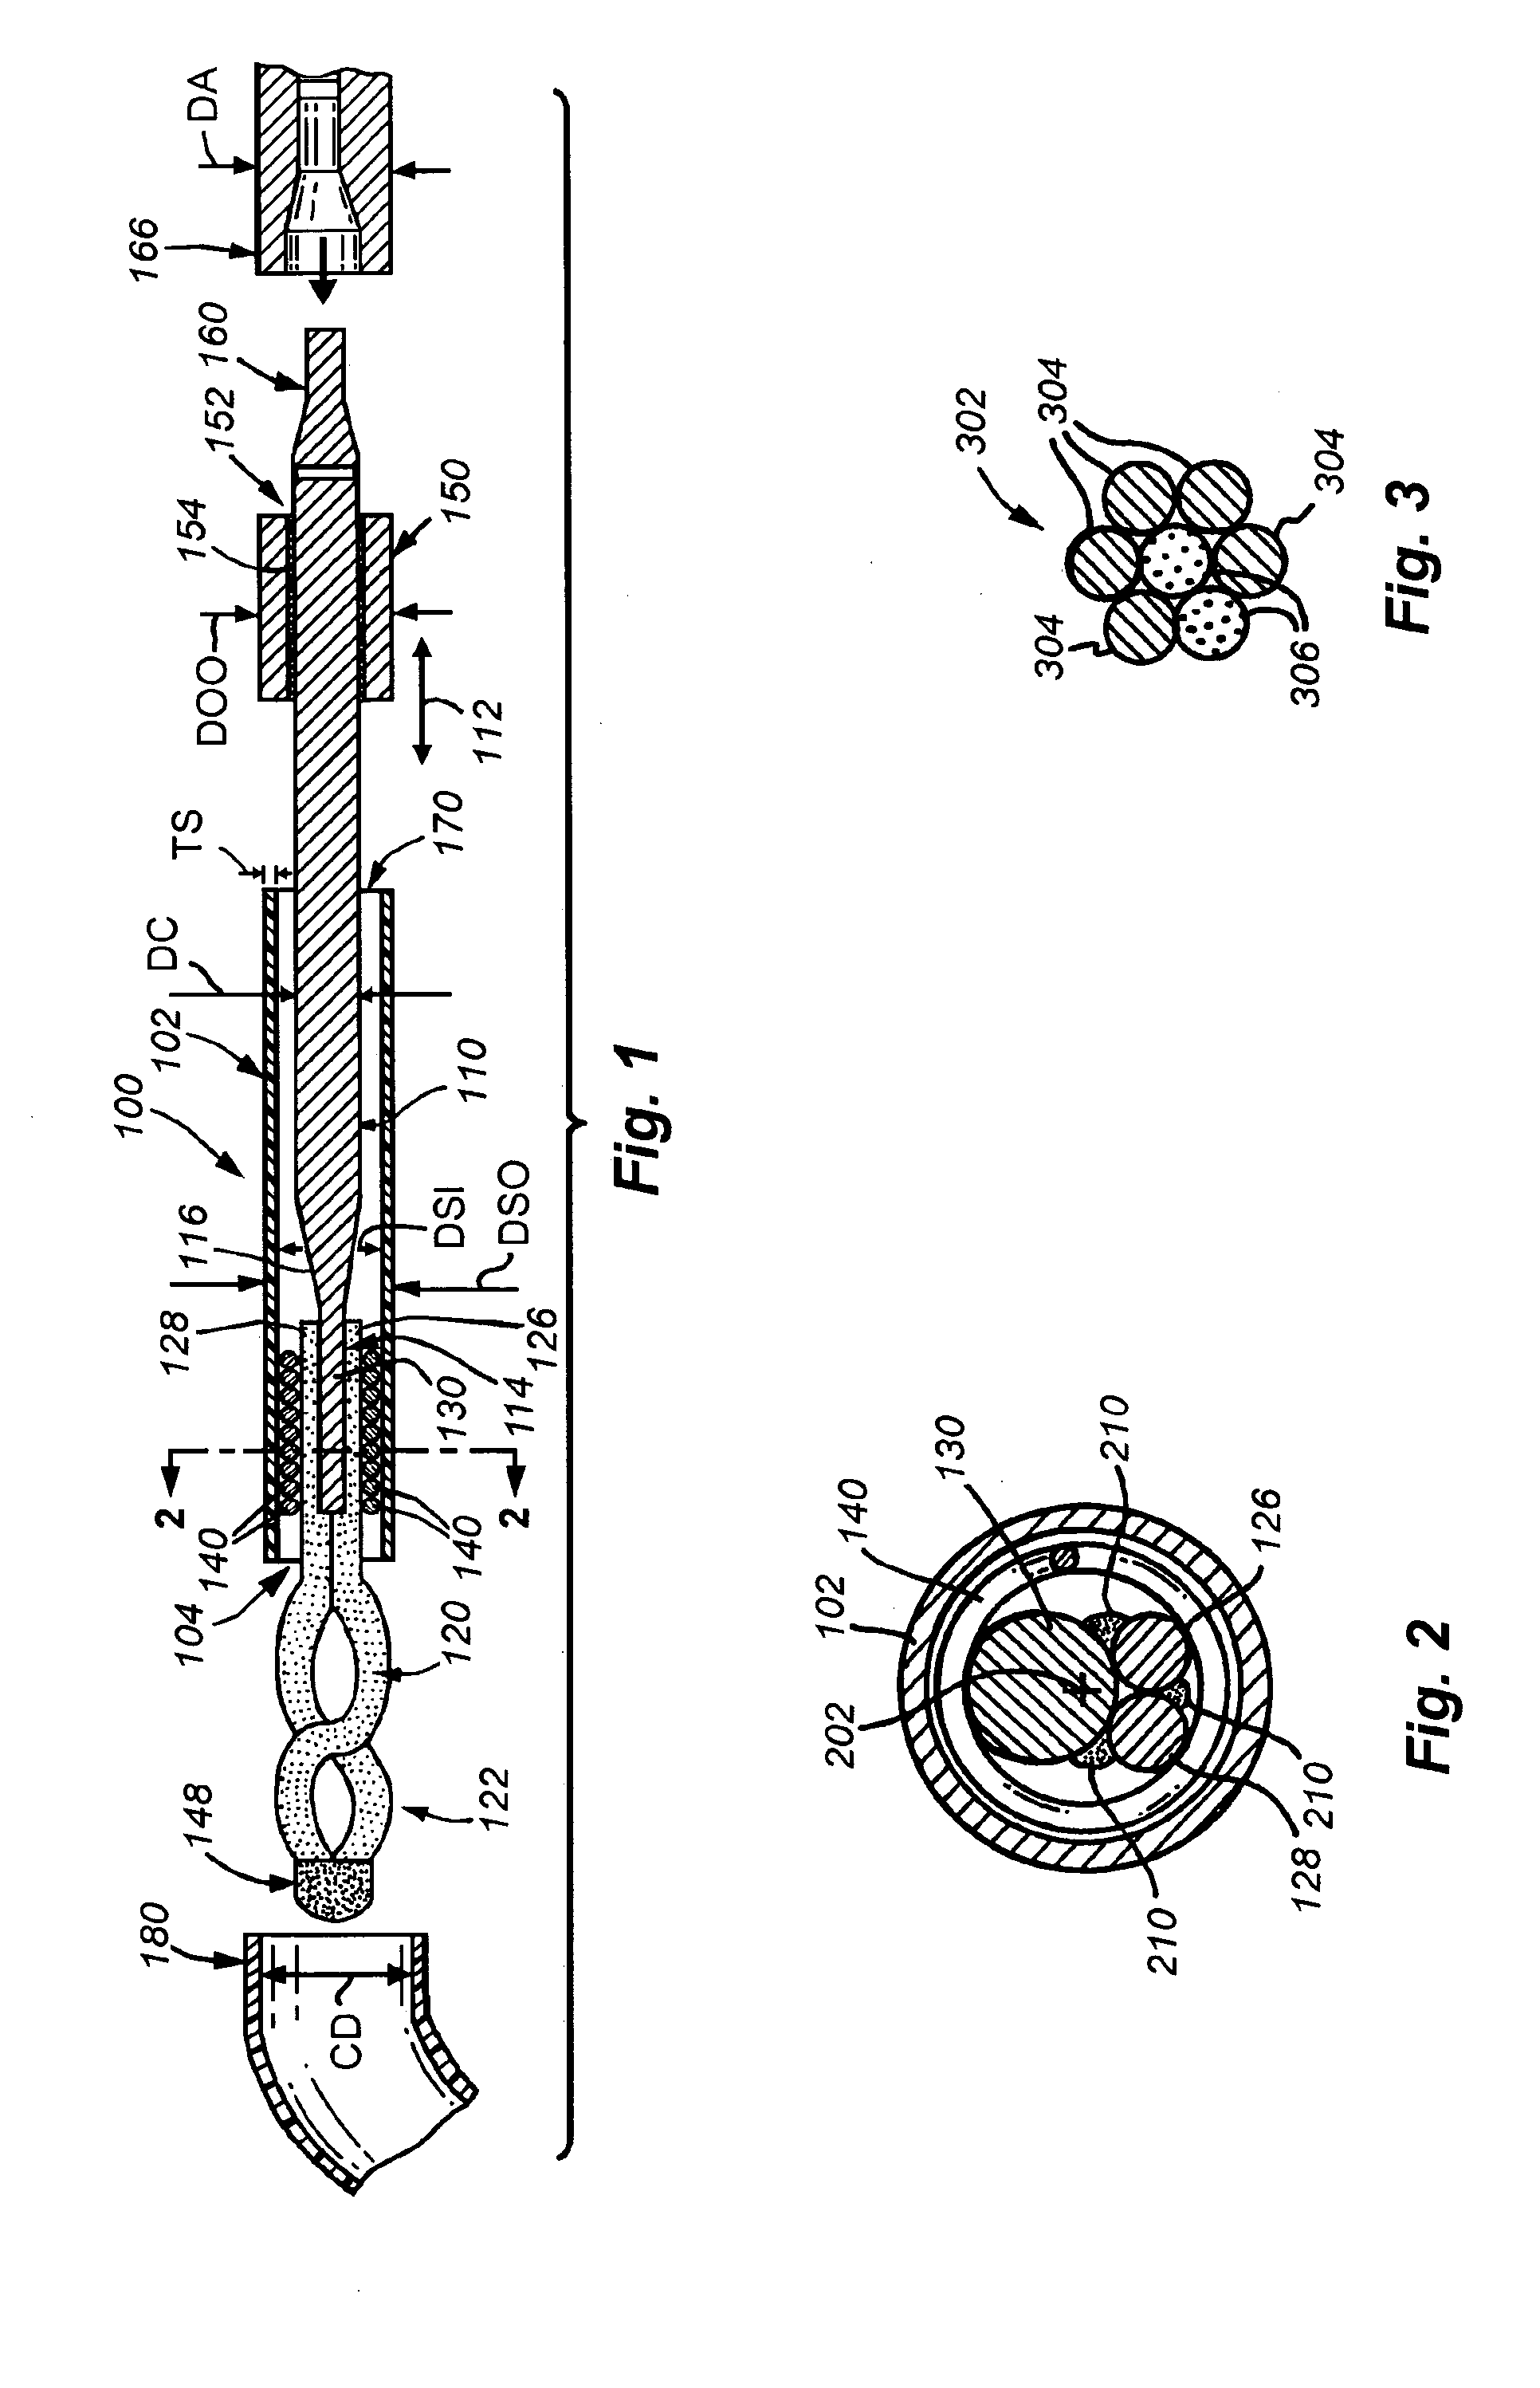 Small-diameter snare